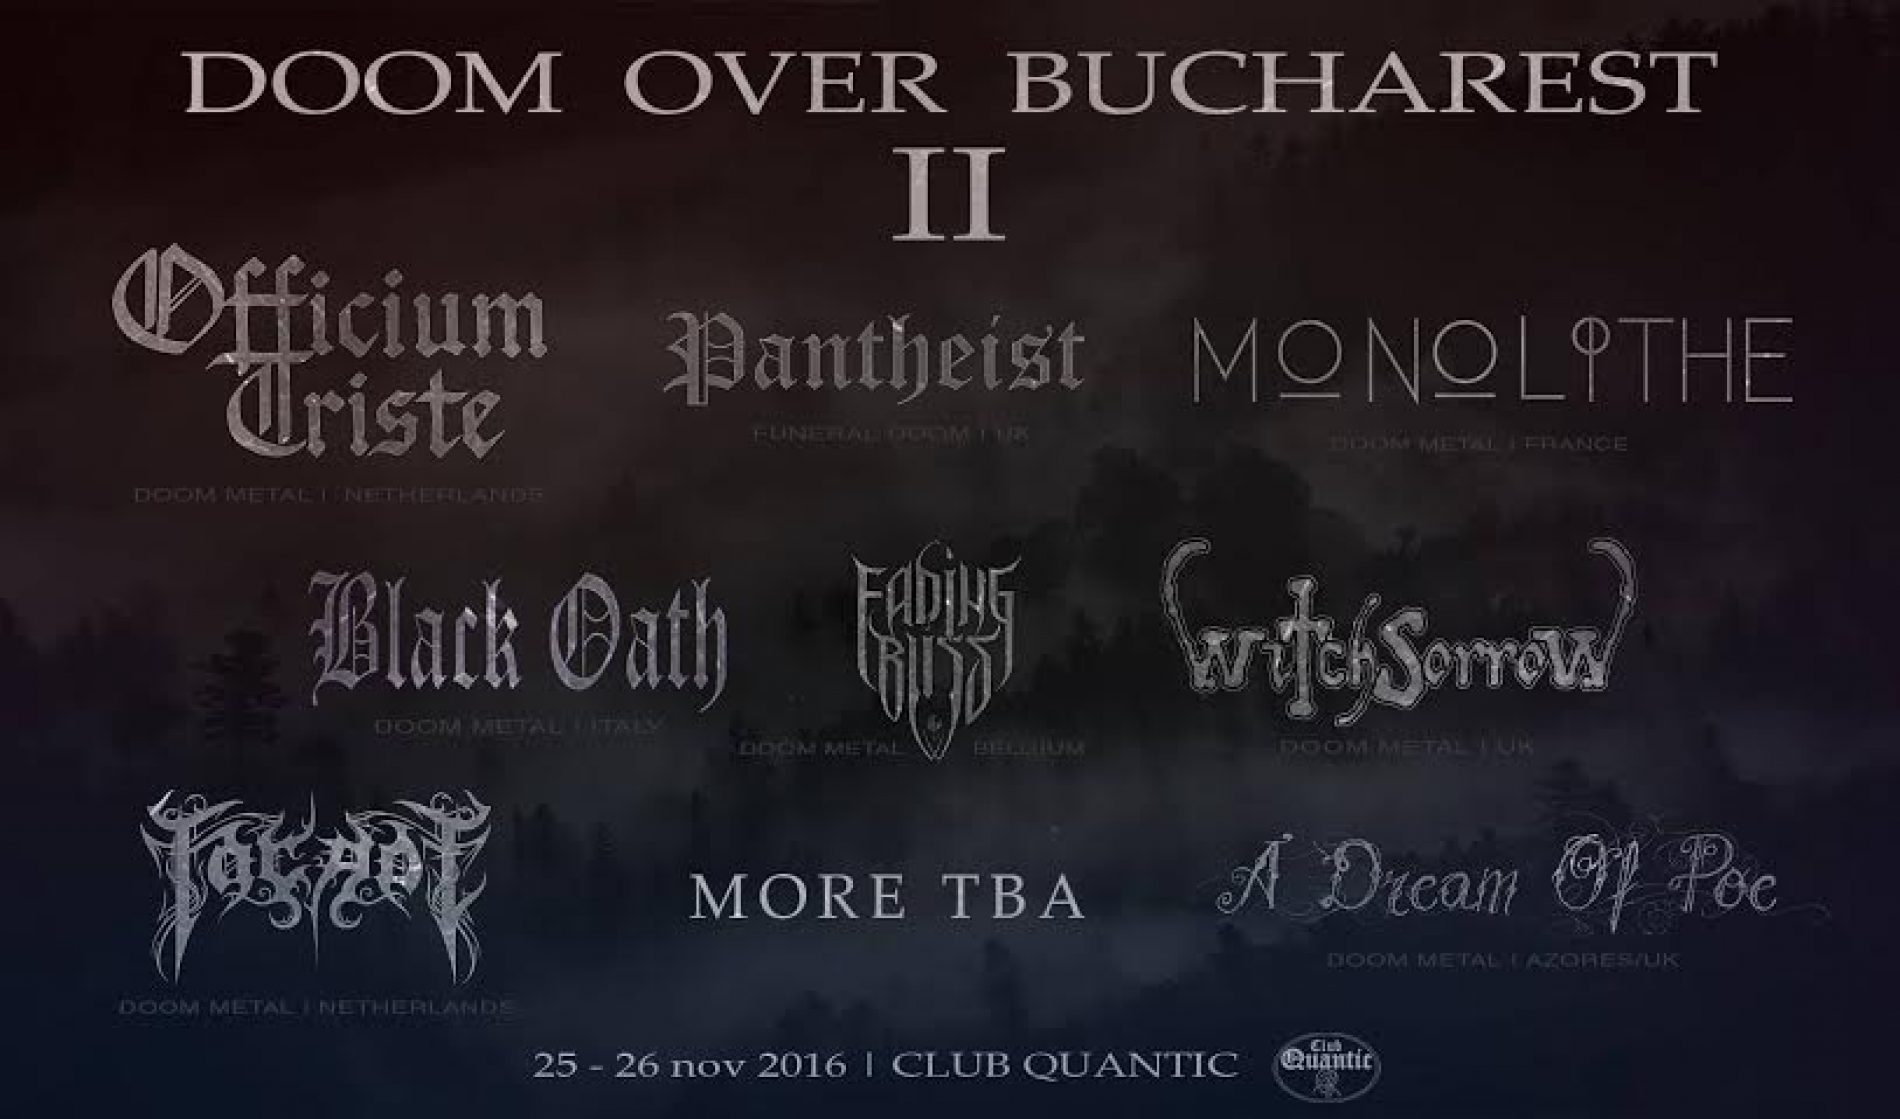 Editia a doua “Doom over Bucharest” va avea loc in noiembrie, in Club Quantic